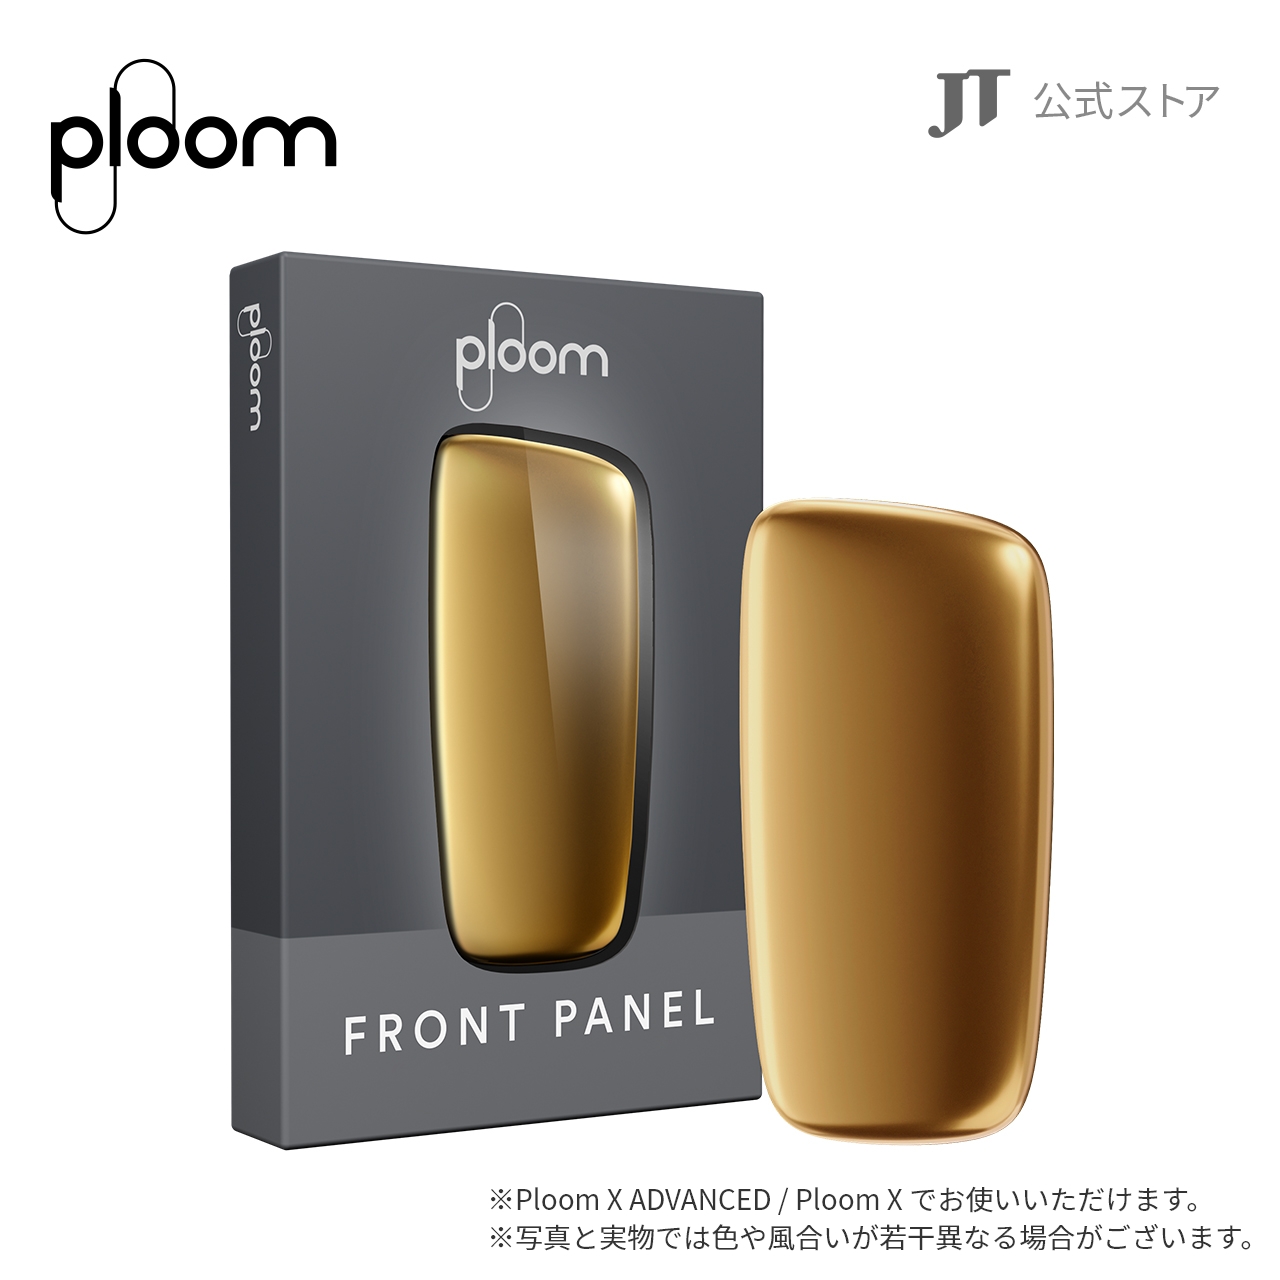 Ploom X フロントパネル （マンゴーイエロー）の商品画像